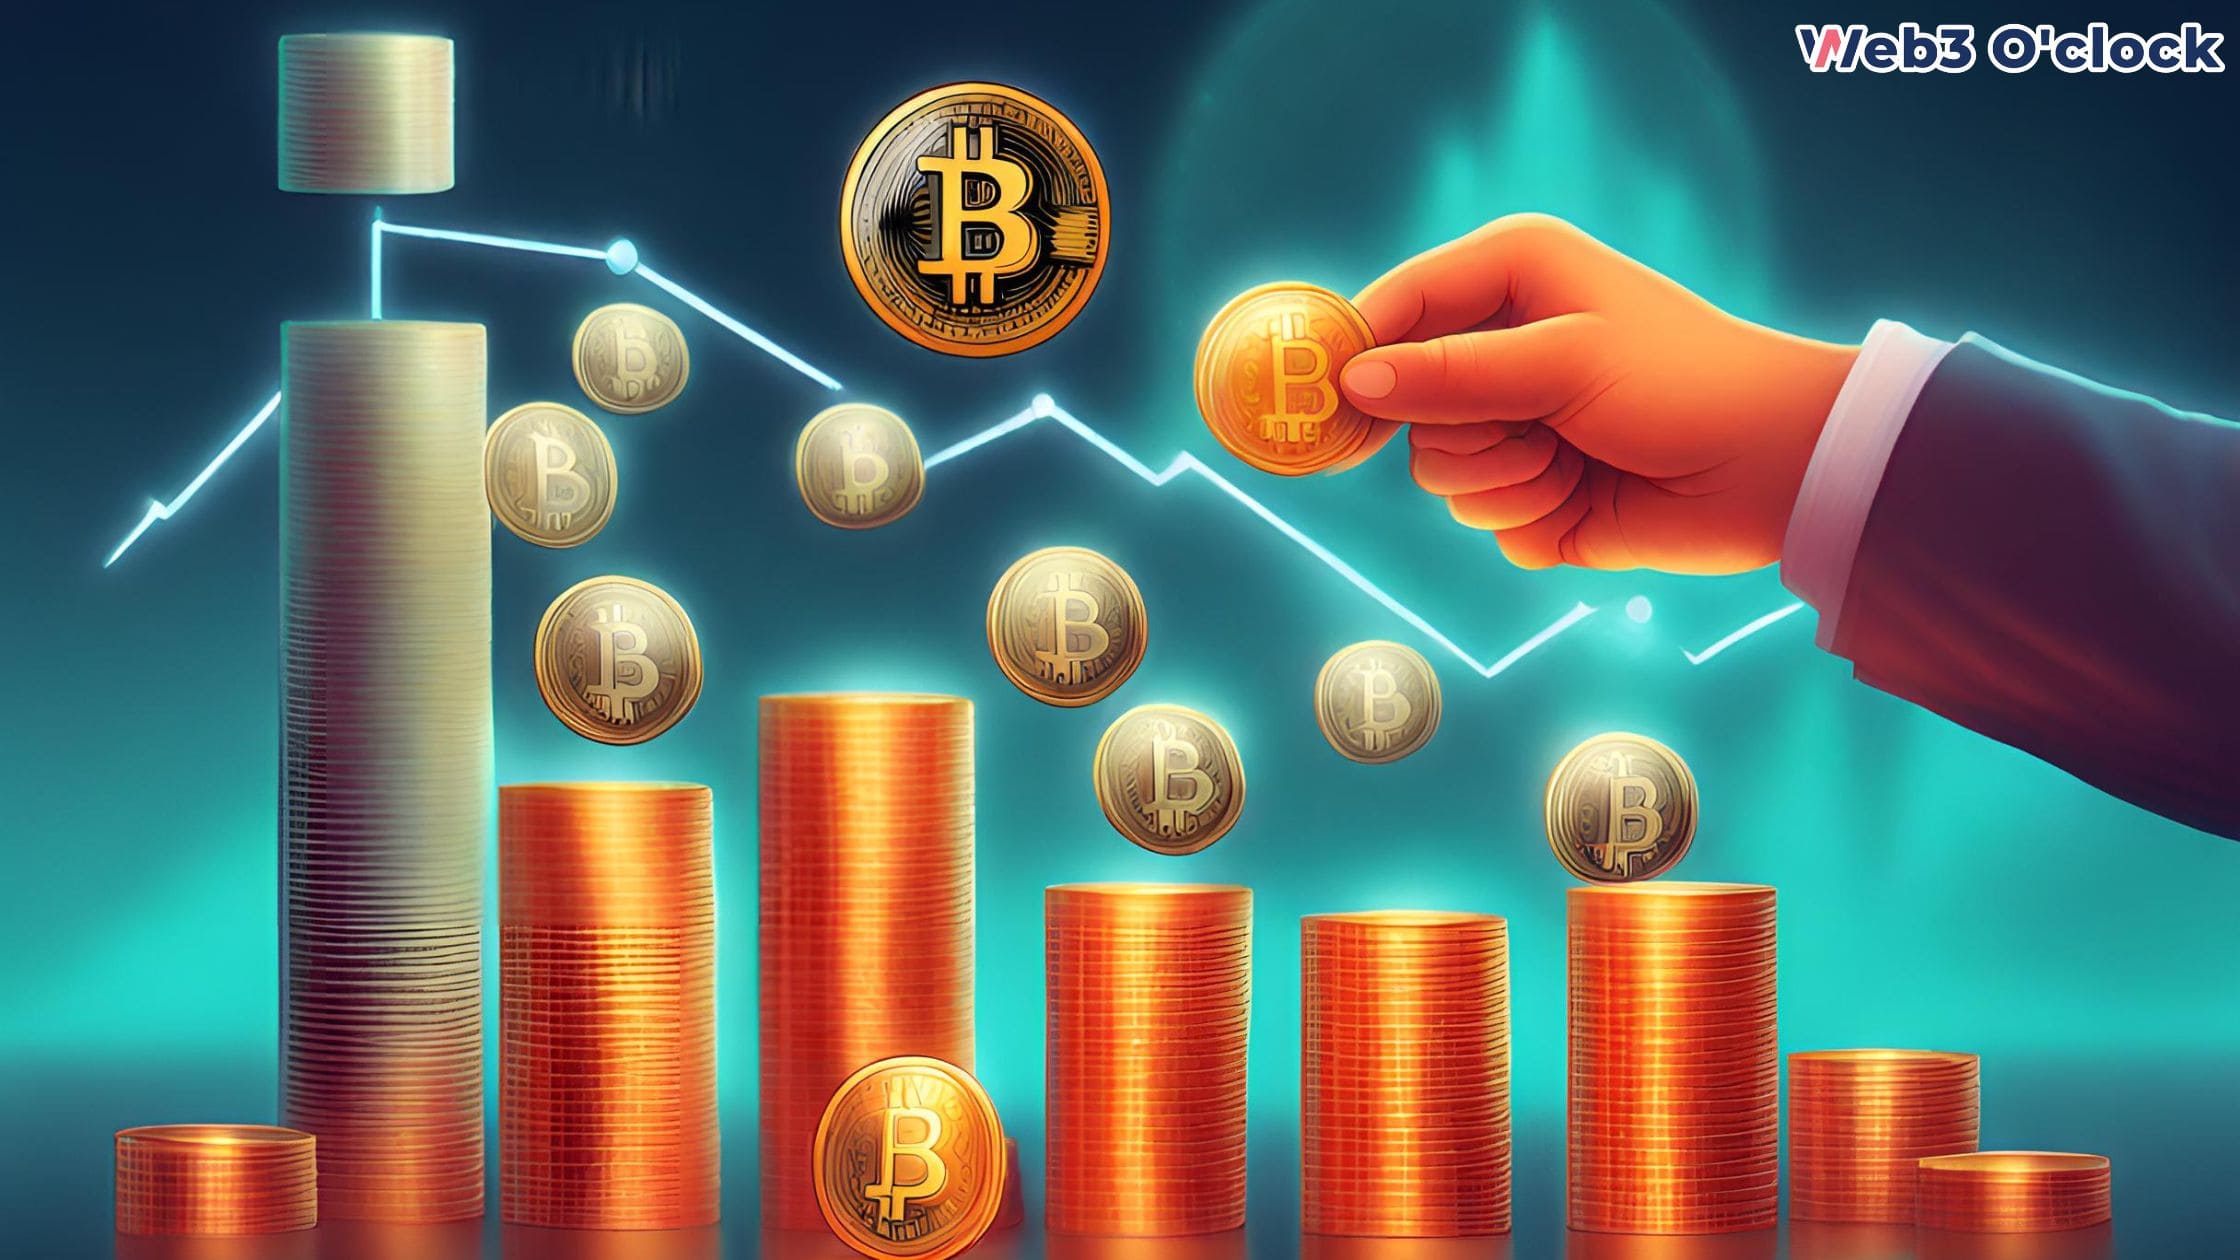 Jack Dorsey's Bitcoin Boost by web3 o'clock